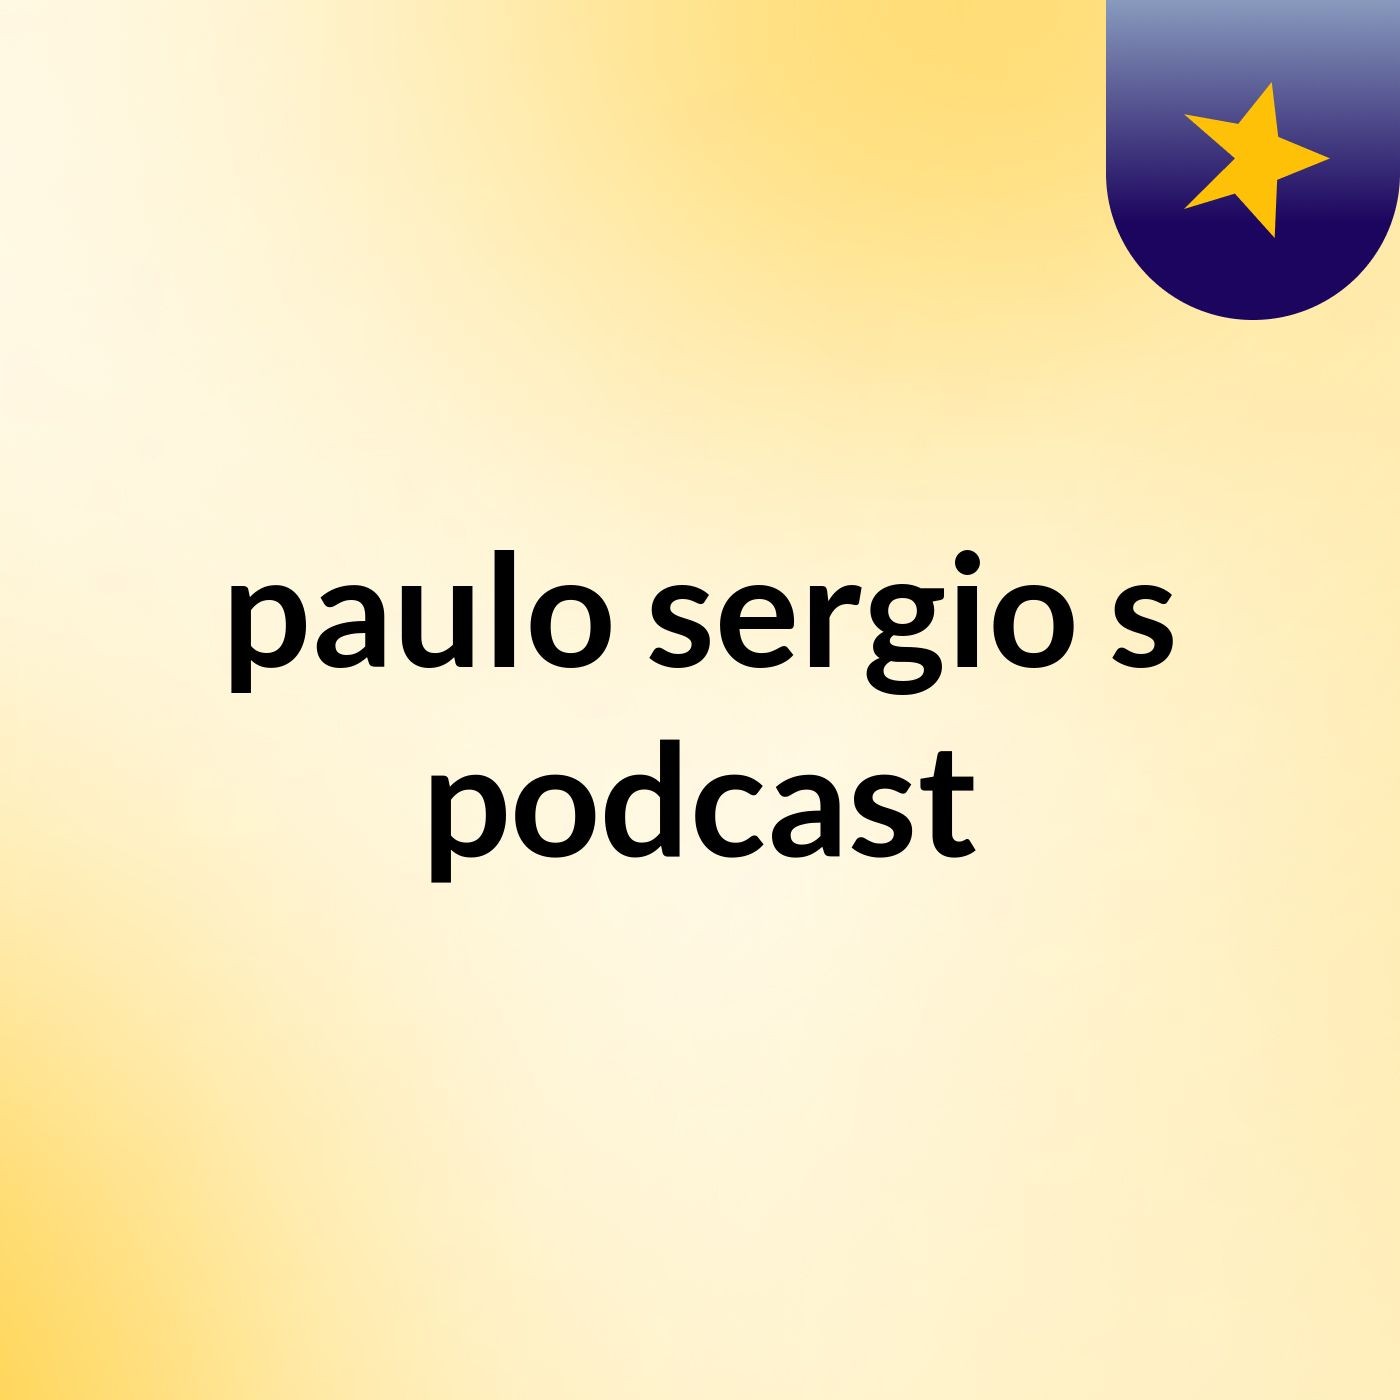 paulo sergio's podcast